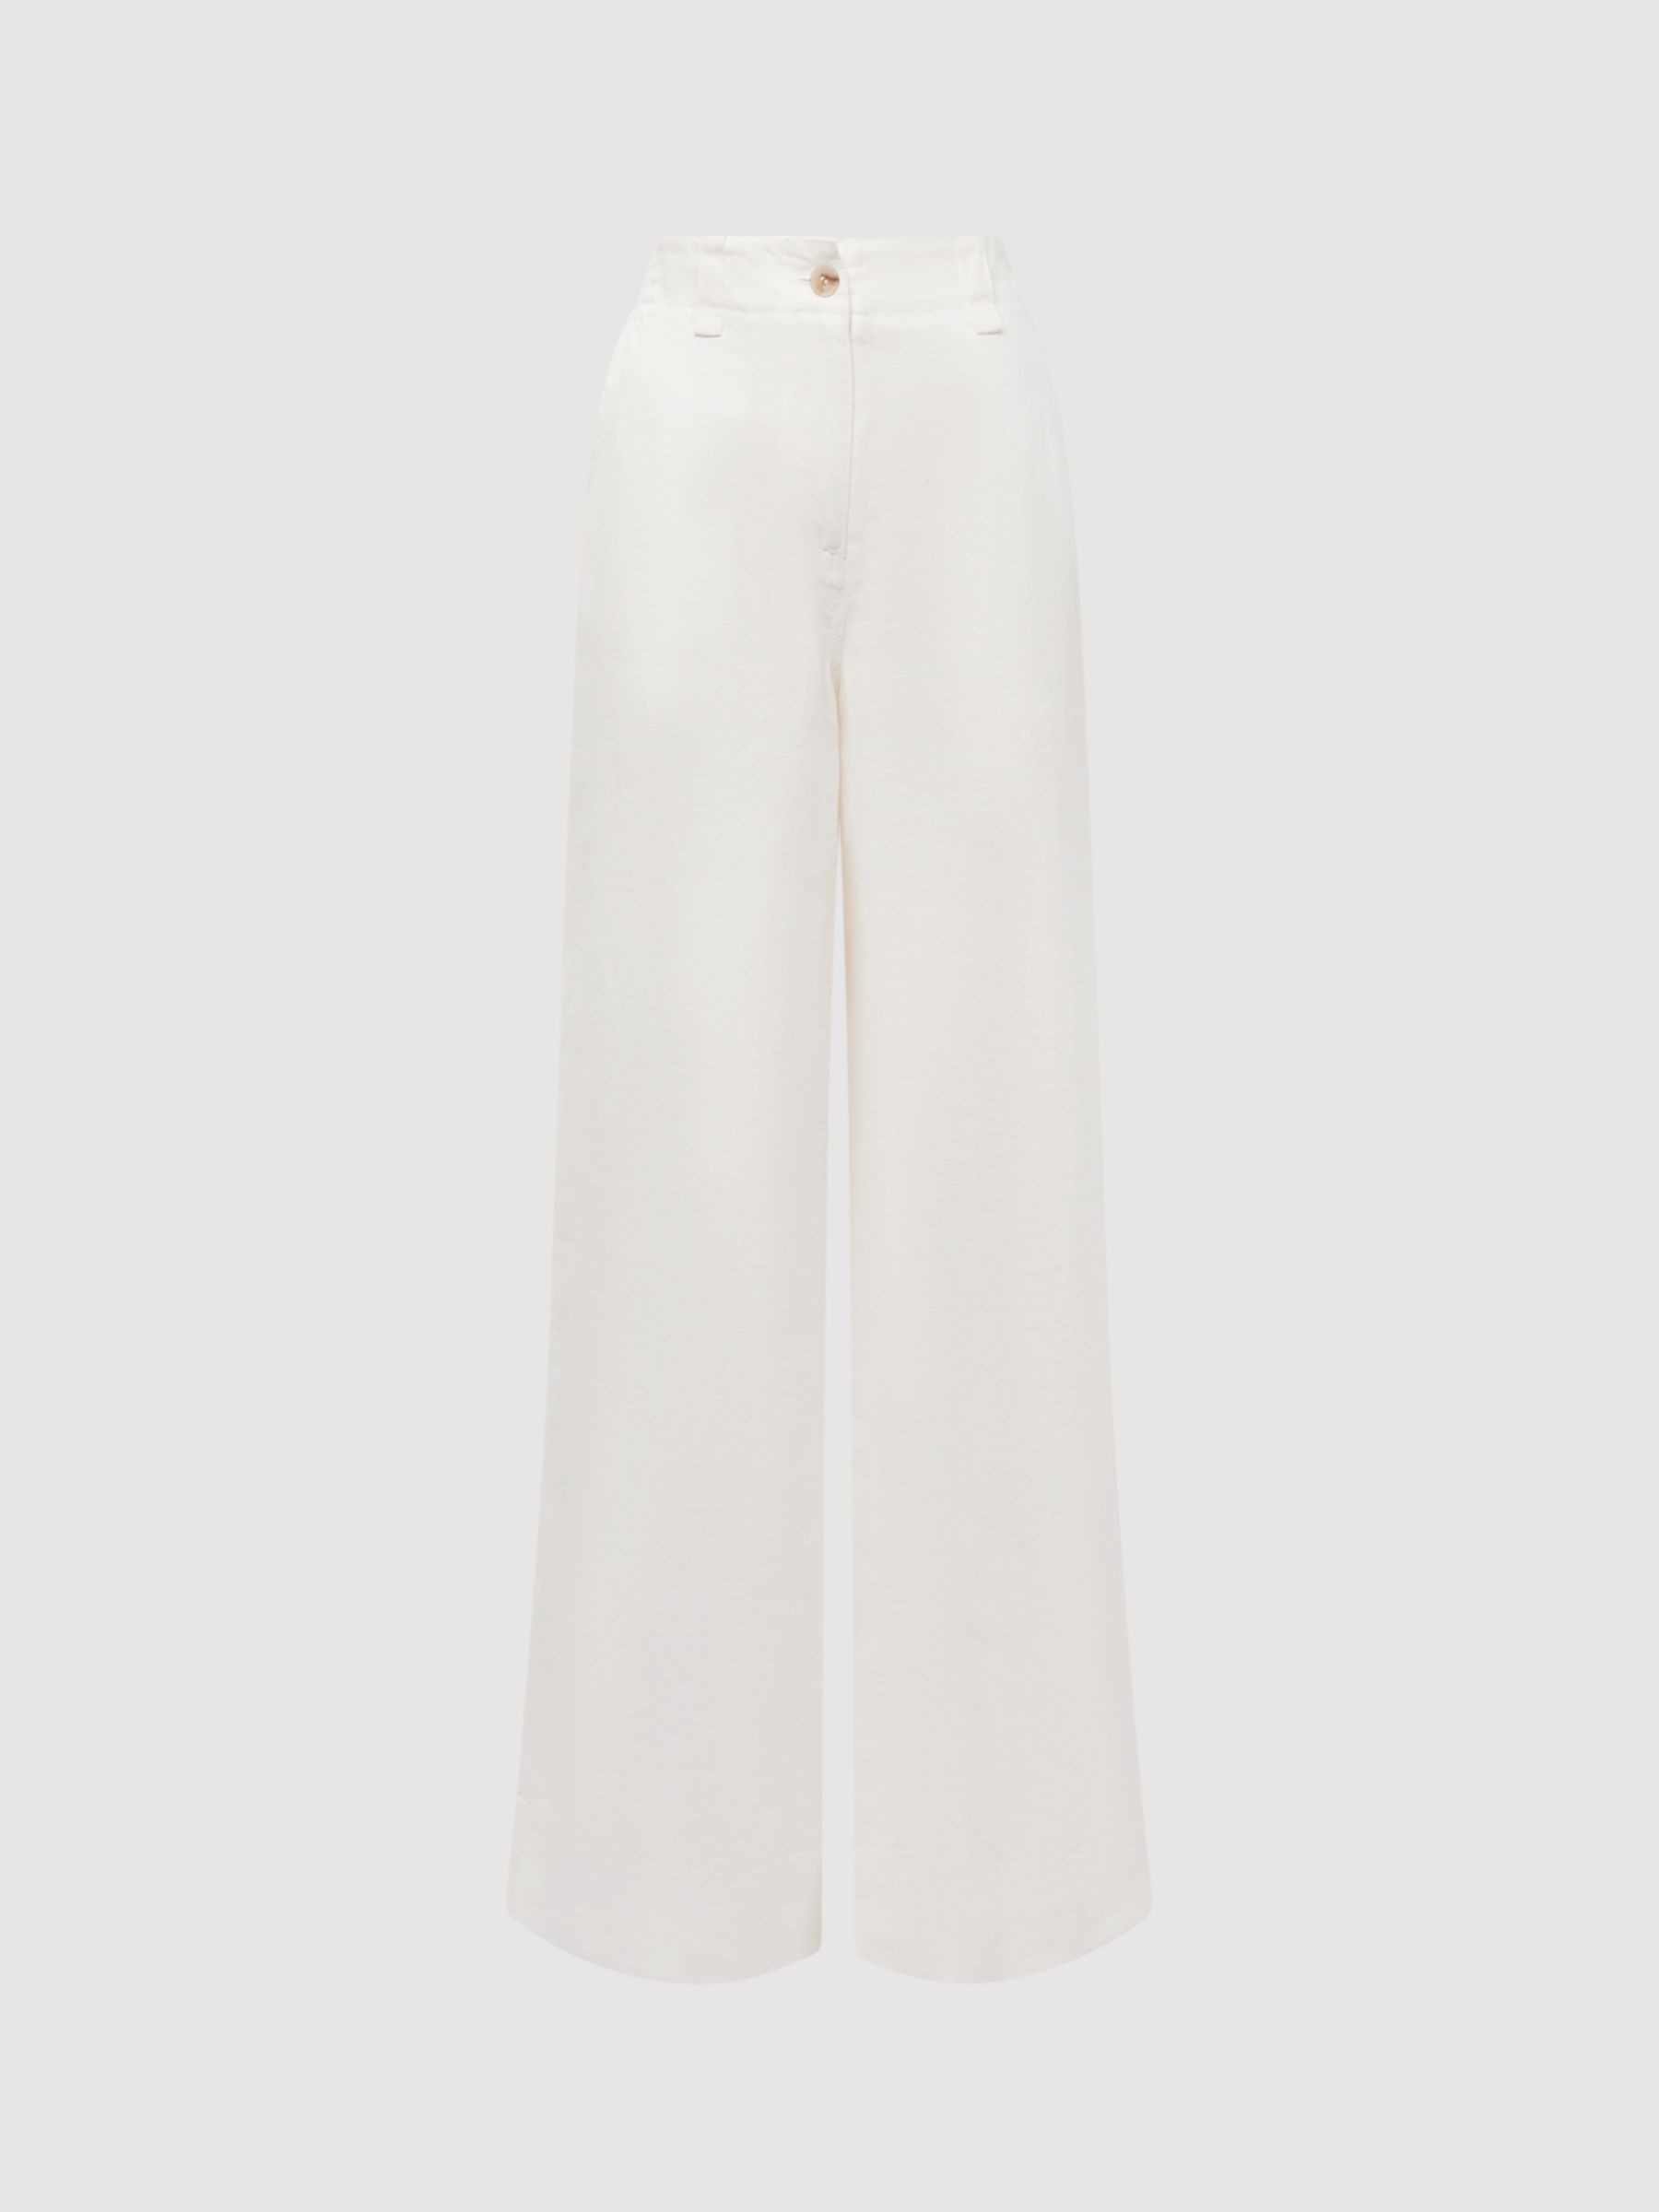 Reiss Demi Garment Dyed Linen Trousers, White at John Lewis & Partners